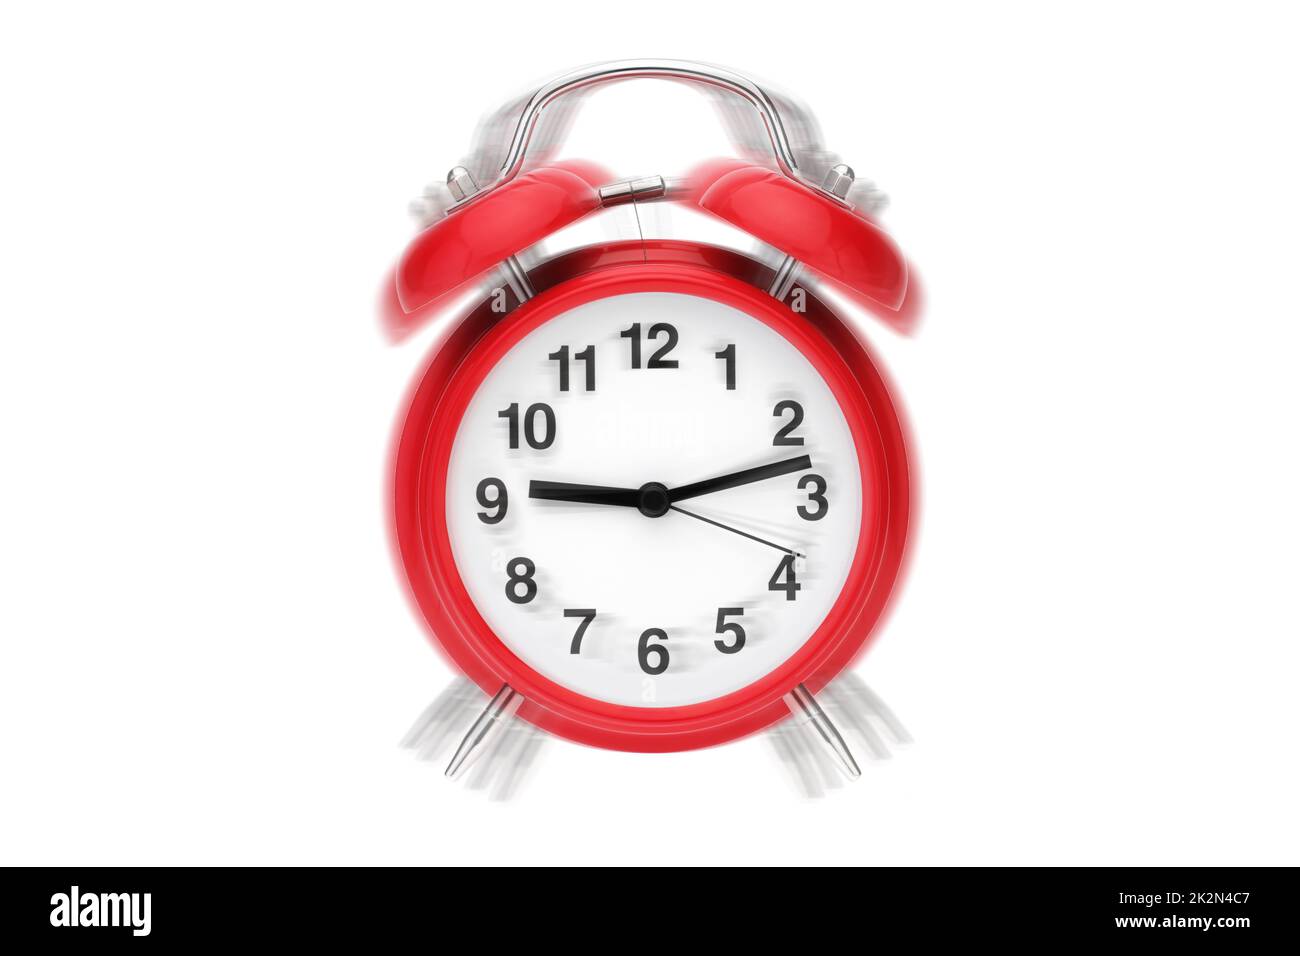 Ringing alarm clock. Red retro alarm clock on white with ringing effect Stock Photo